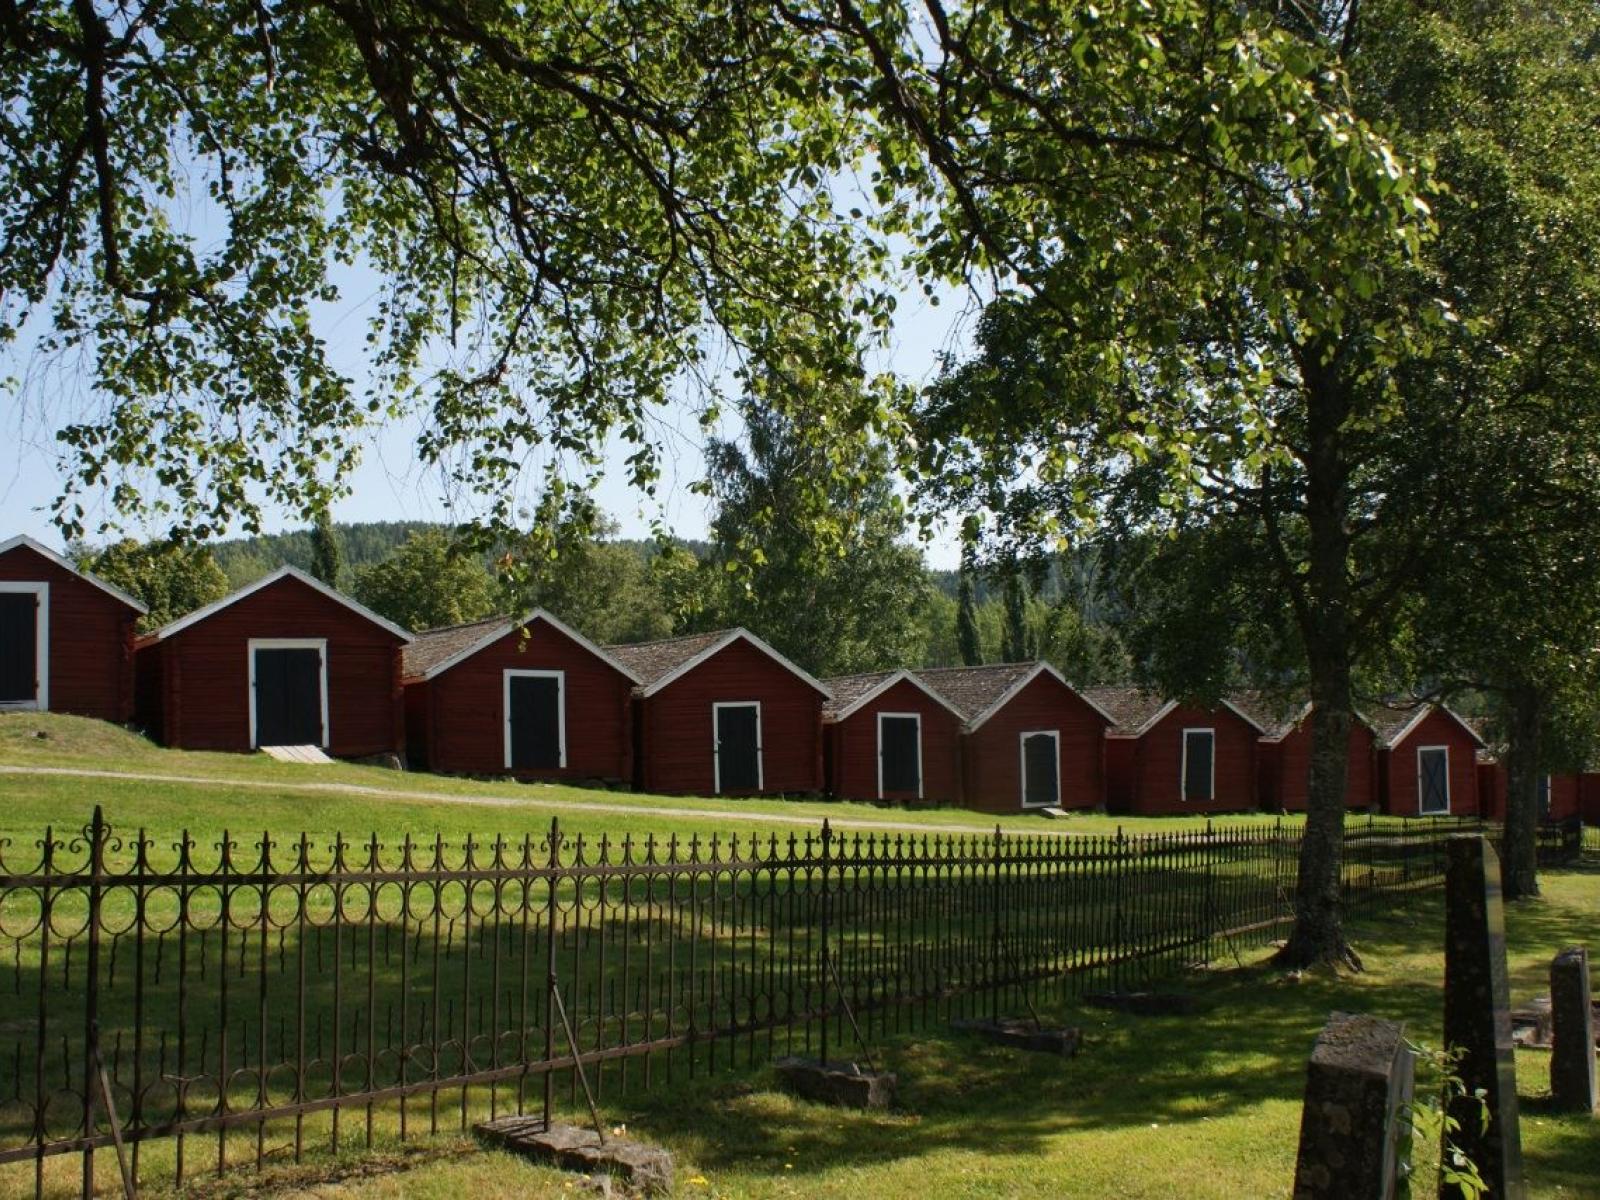 Church stables in Nordingrå